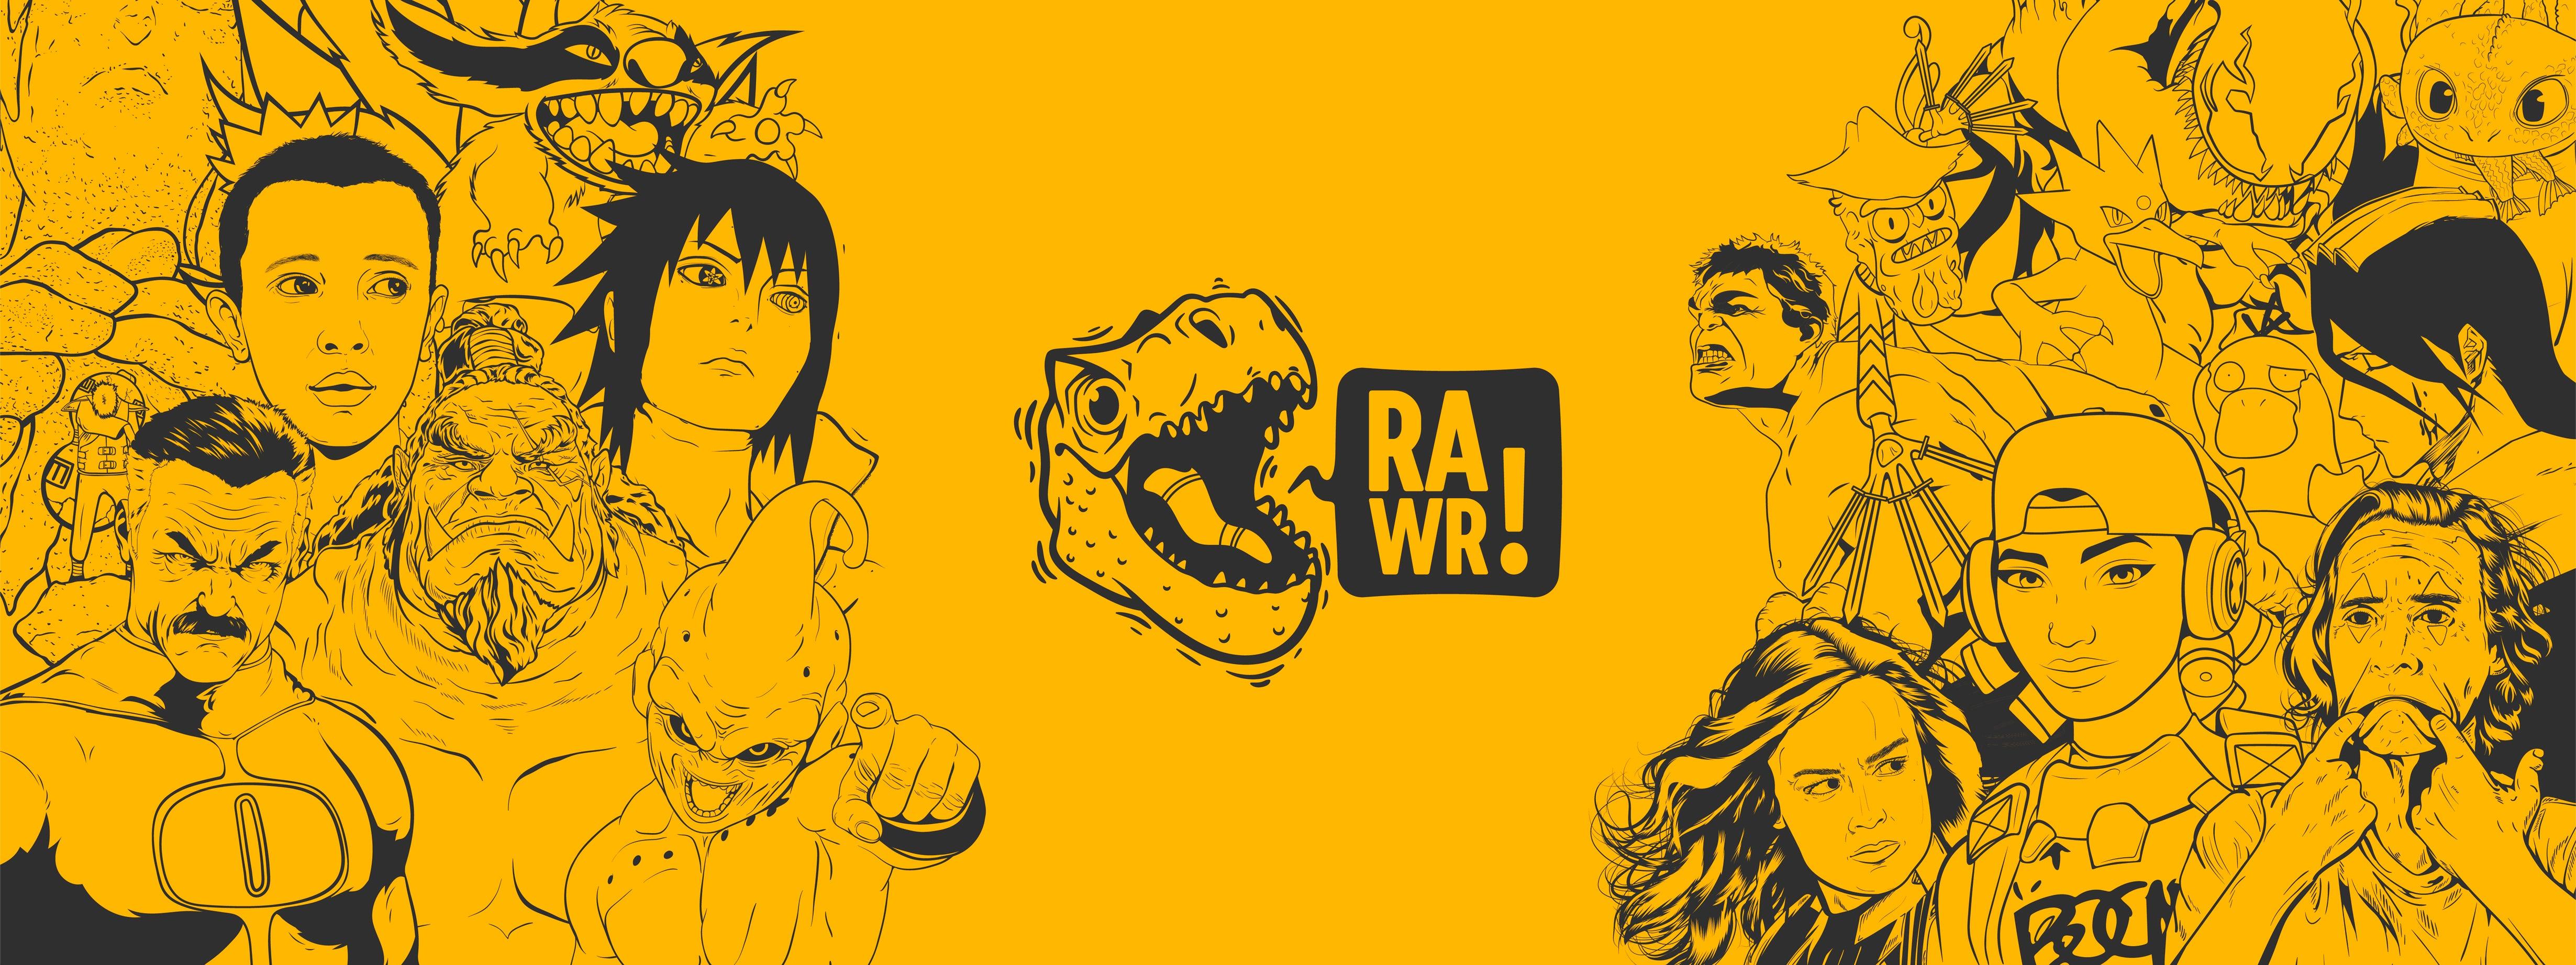 @rawr.artdesign - Rei do Sticker